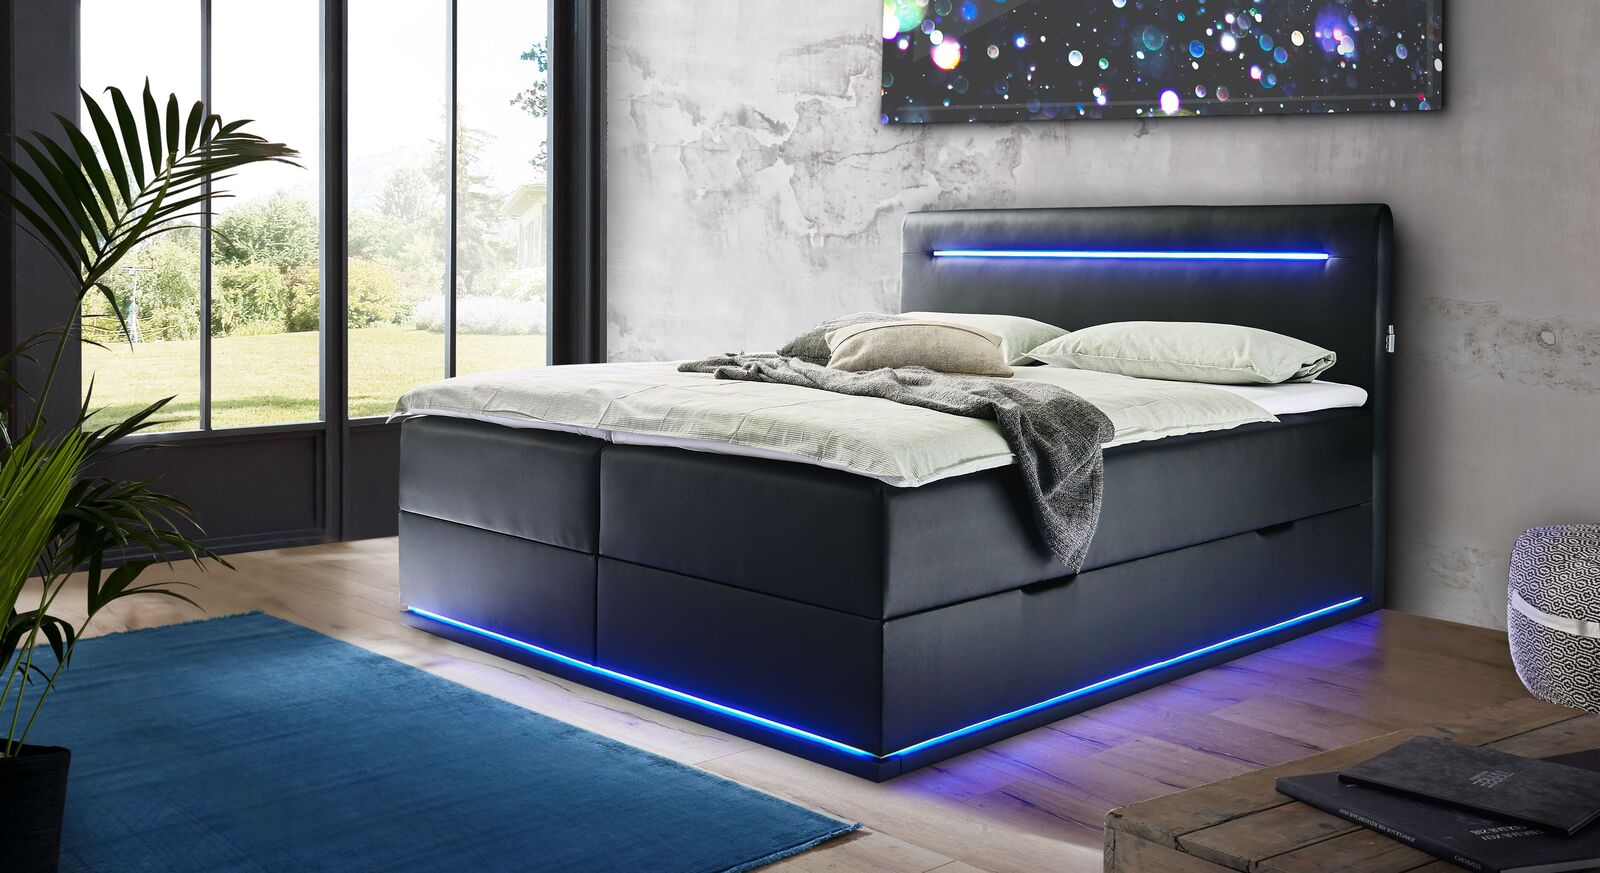 Bettkasten-Boxspringbett Xaya mit blauer LED-Beleuchtung